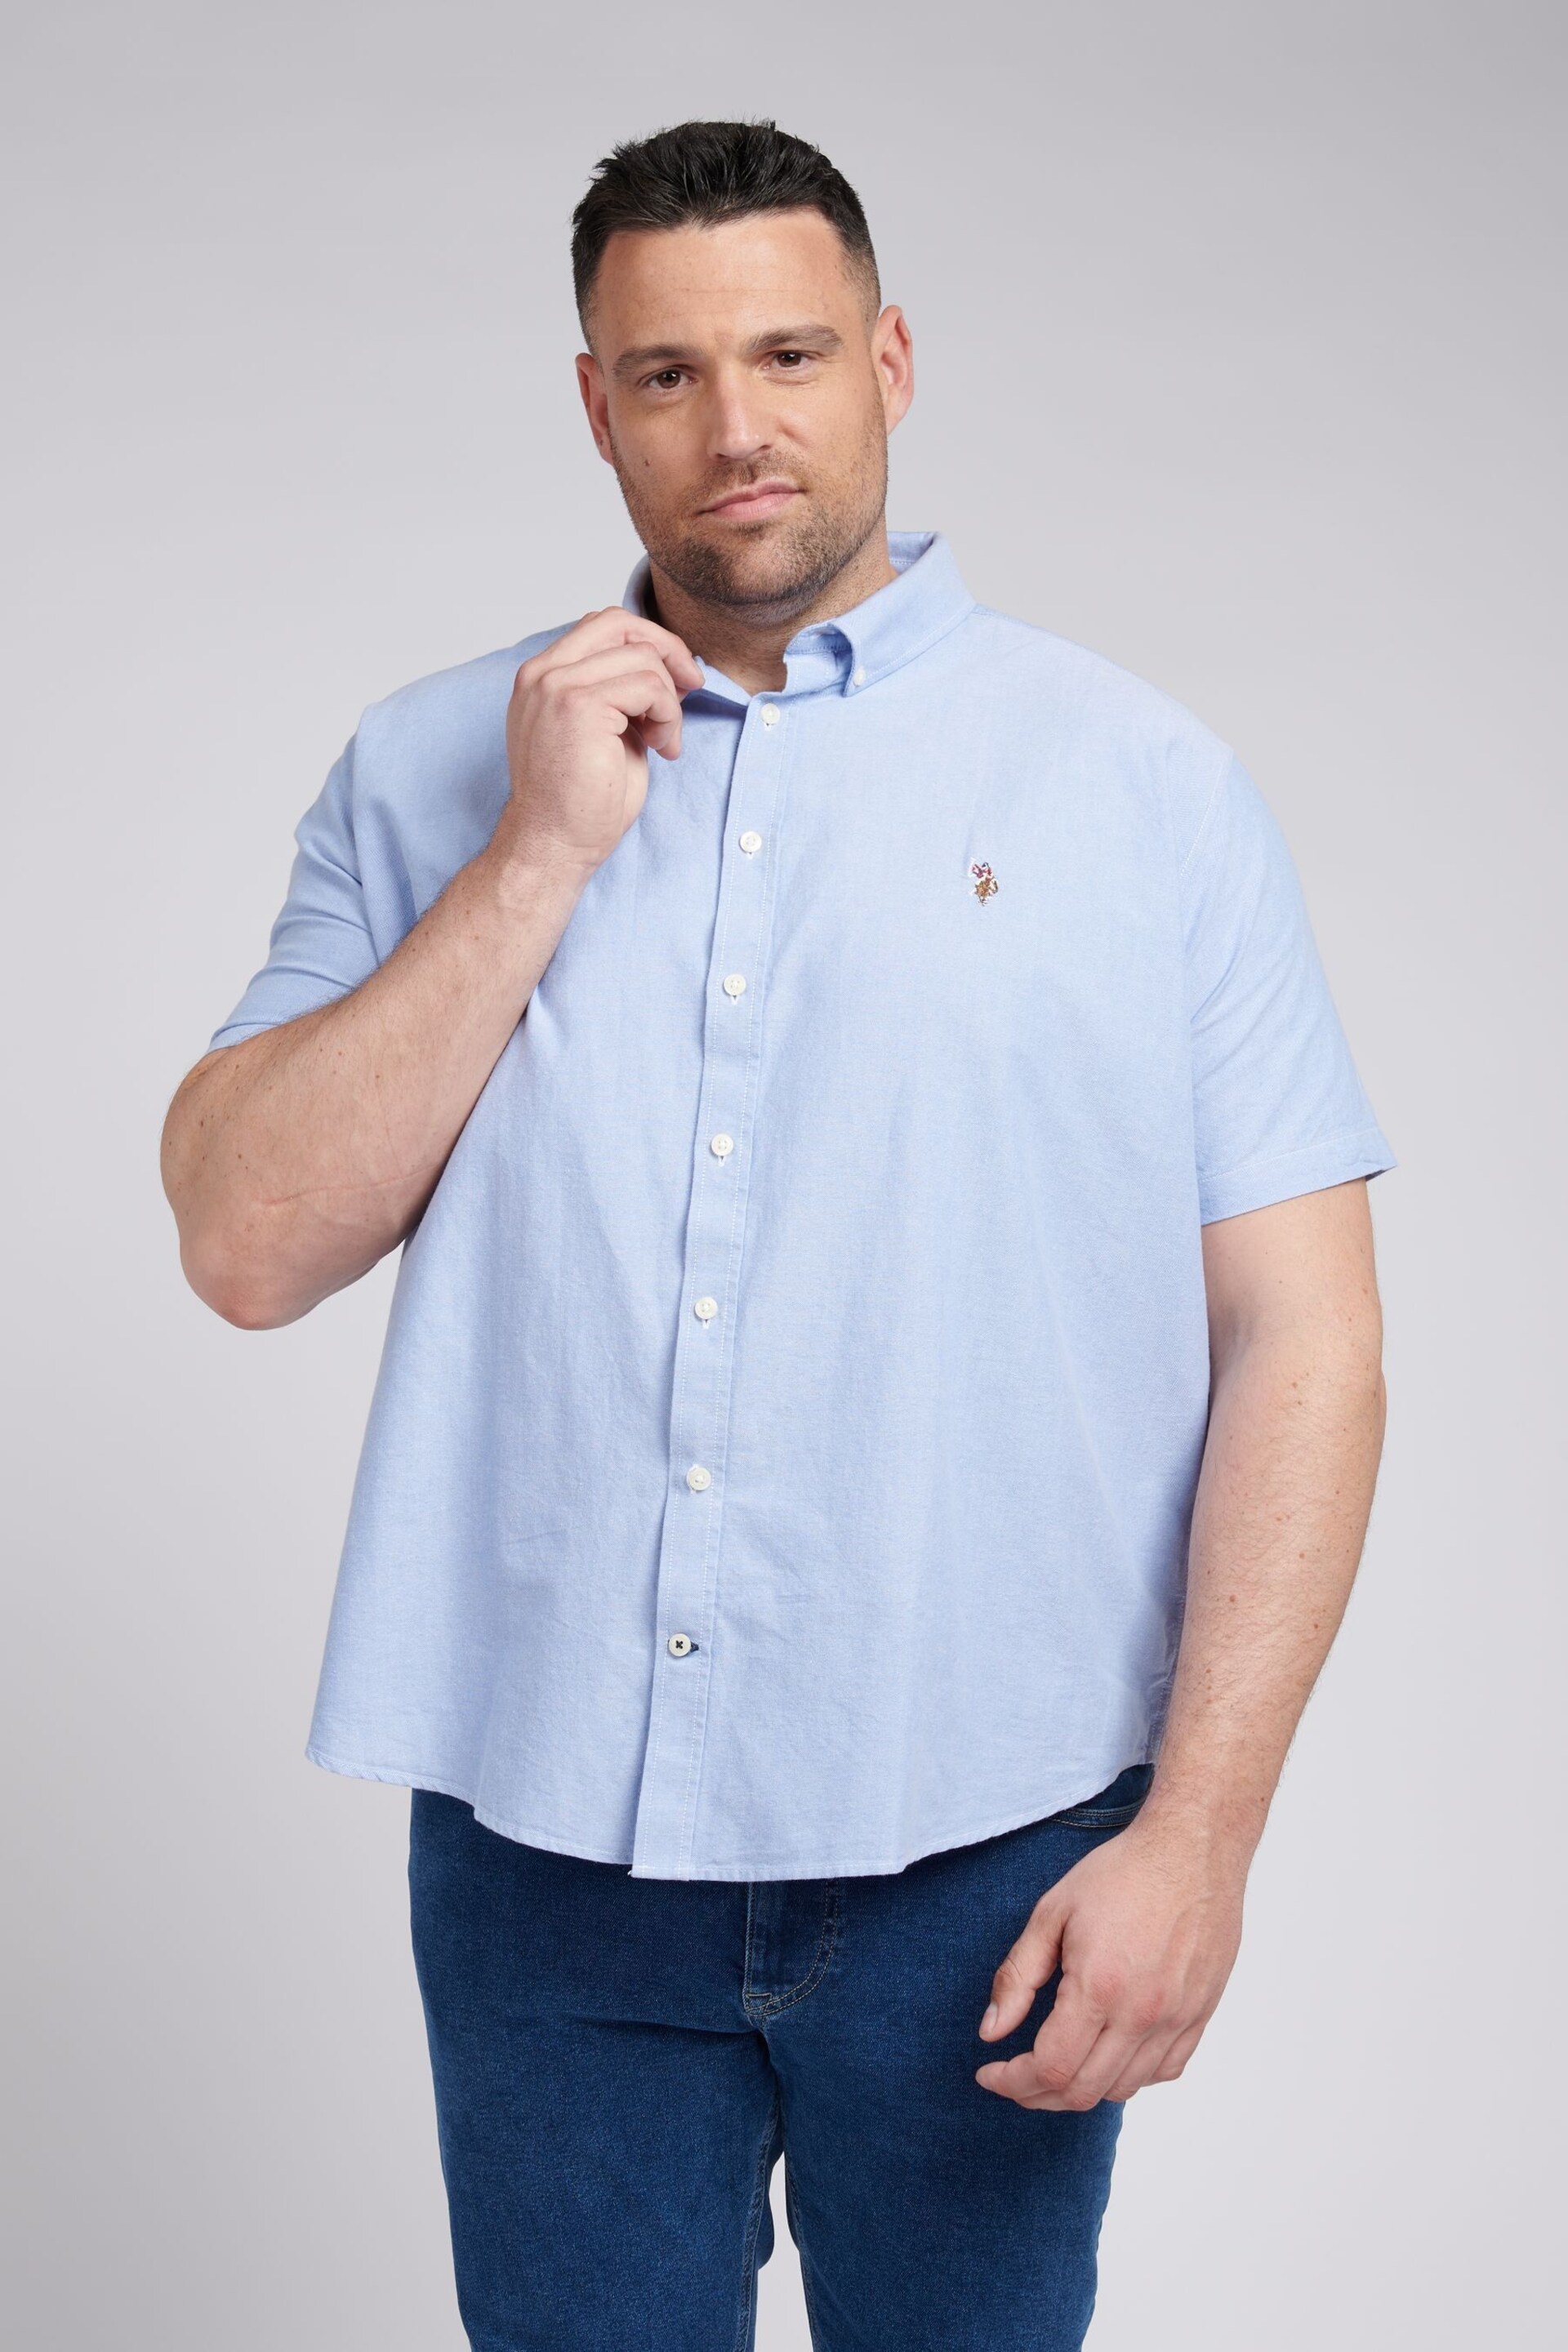 U.S. Polo Assn. Mens Blue Big & Tall Short Sleeve Oxford Shirt - Image 1 of 3